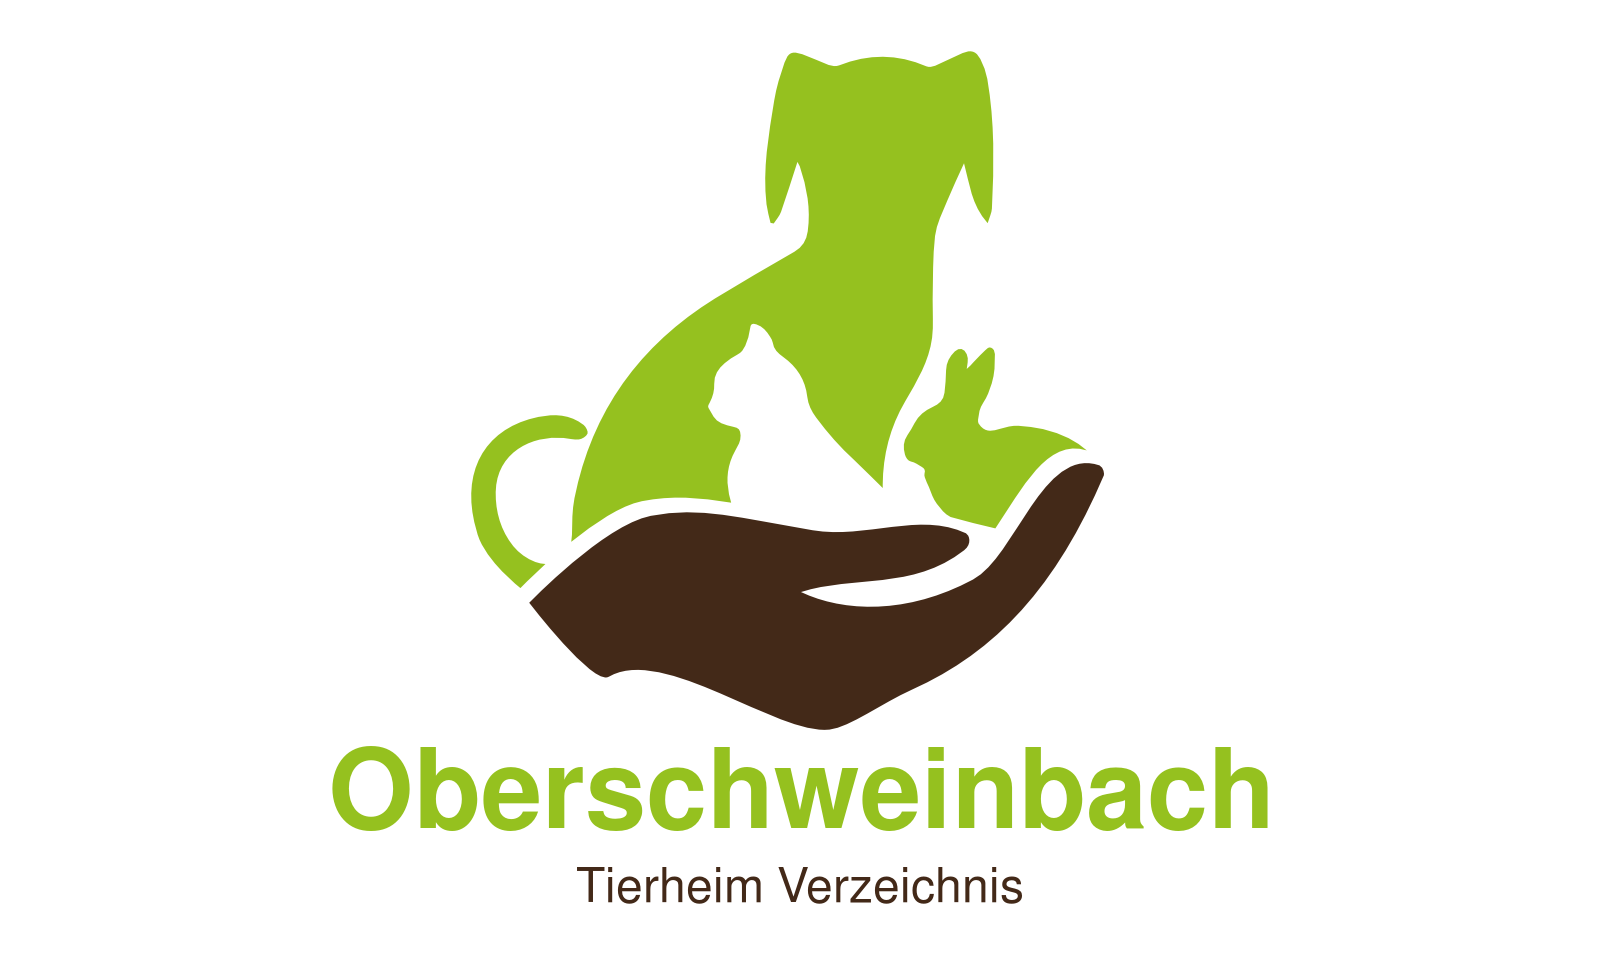 Tierheim Oberschweinbach